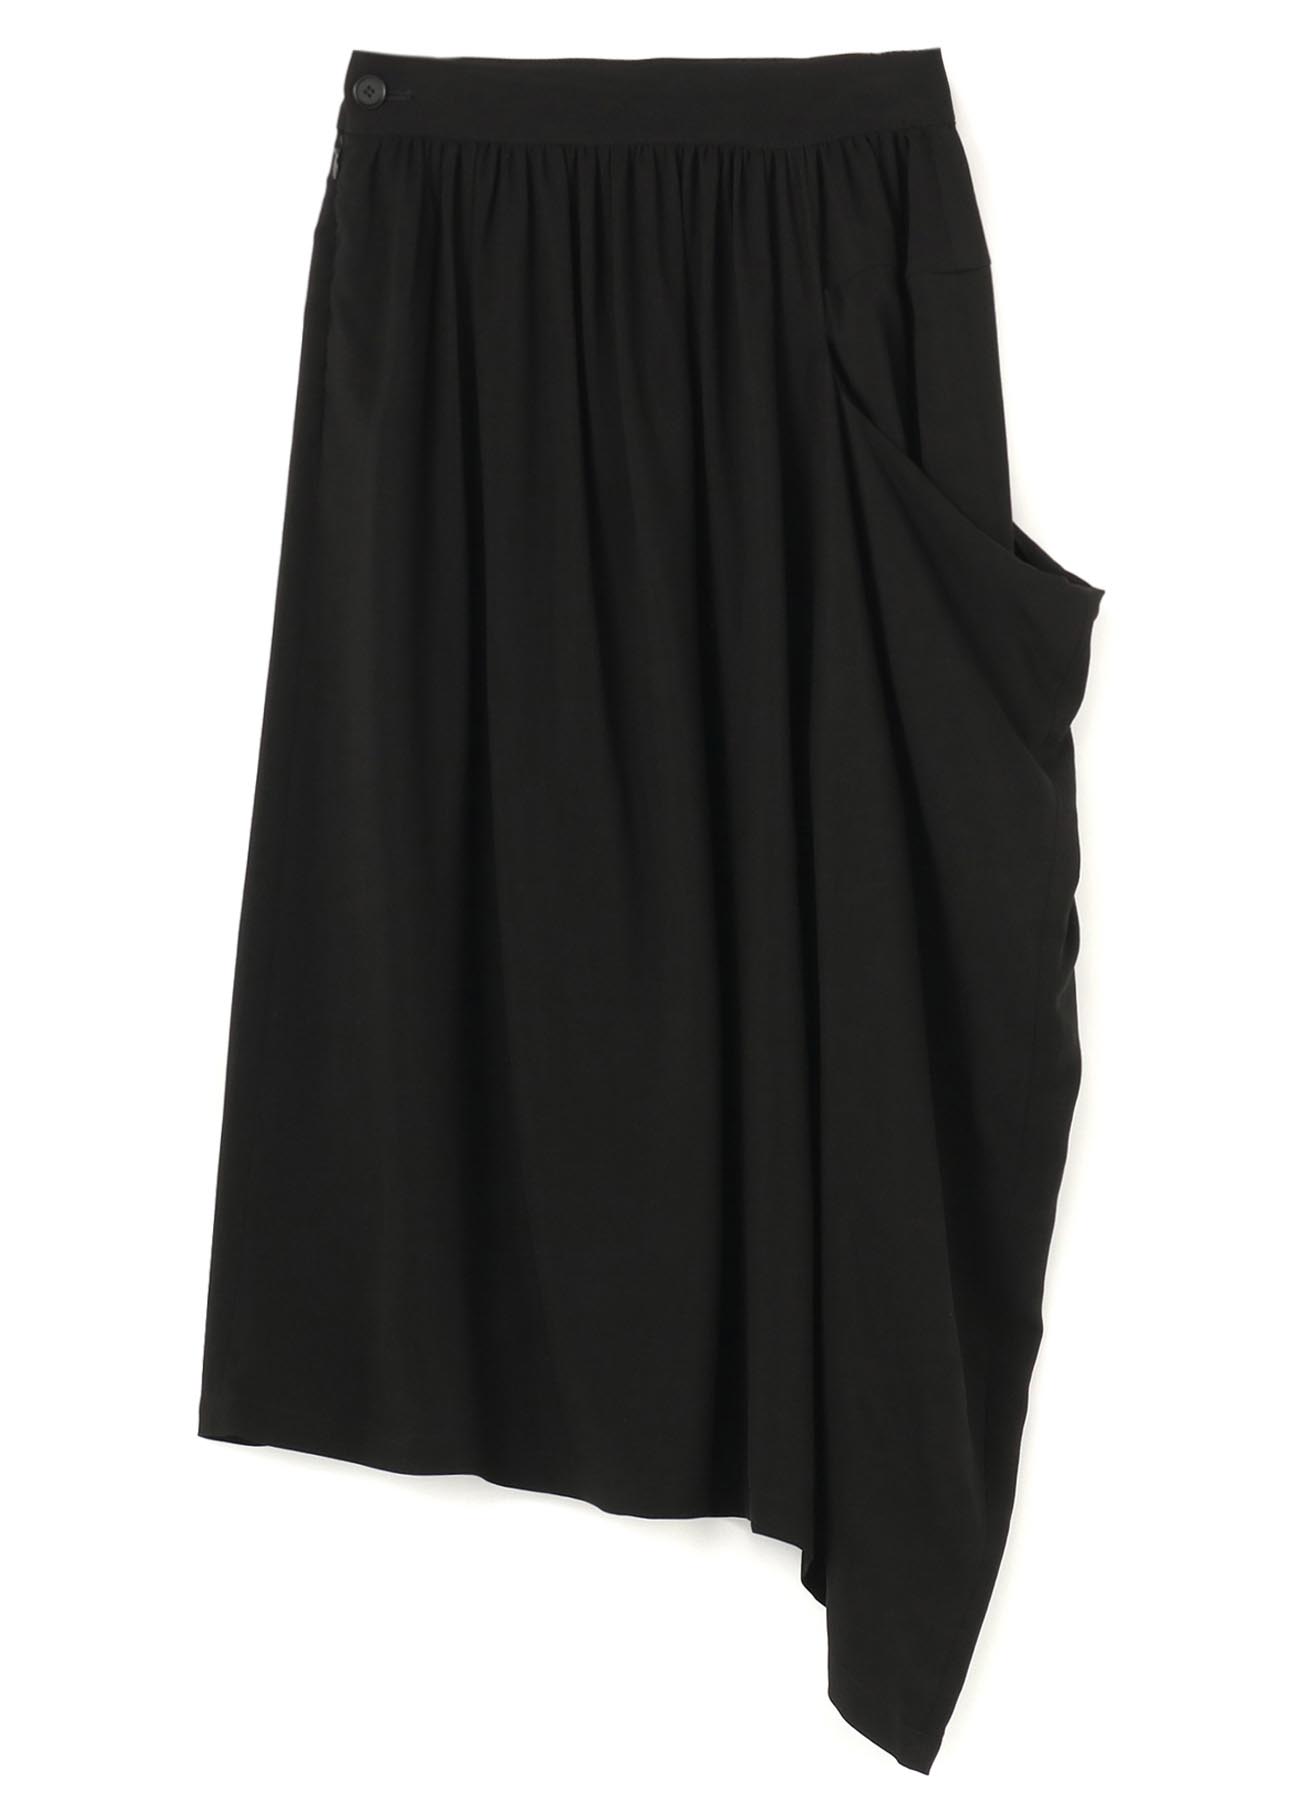 Ry/Cu Tussah Drape Pocket Skirt